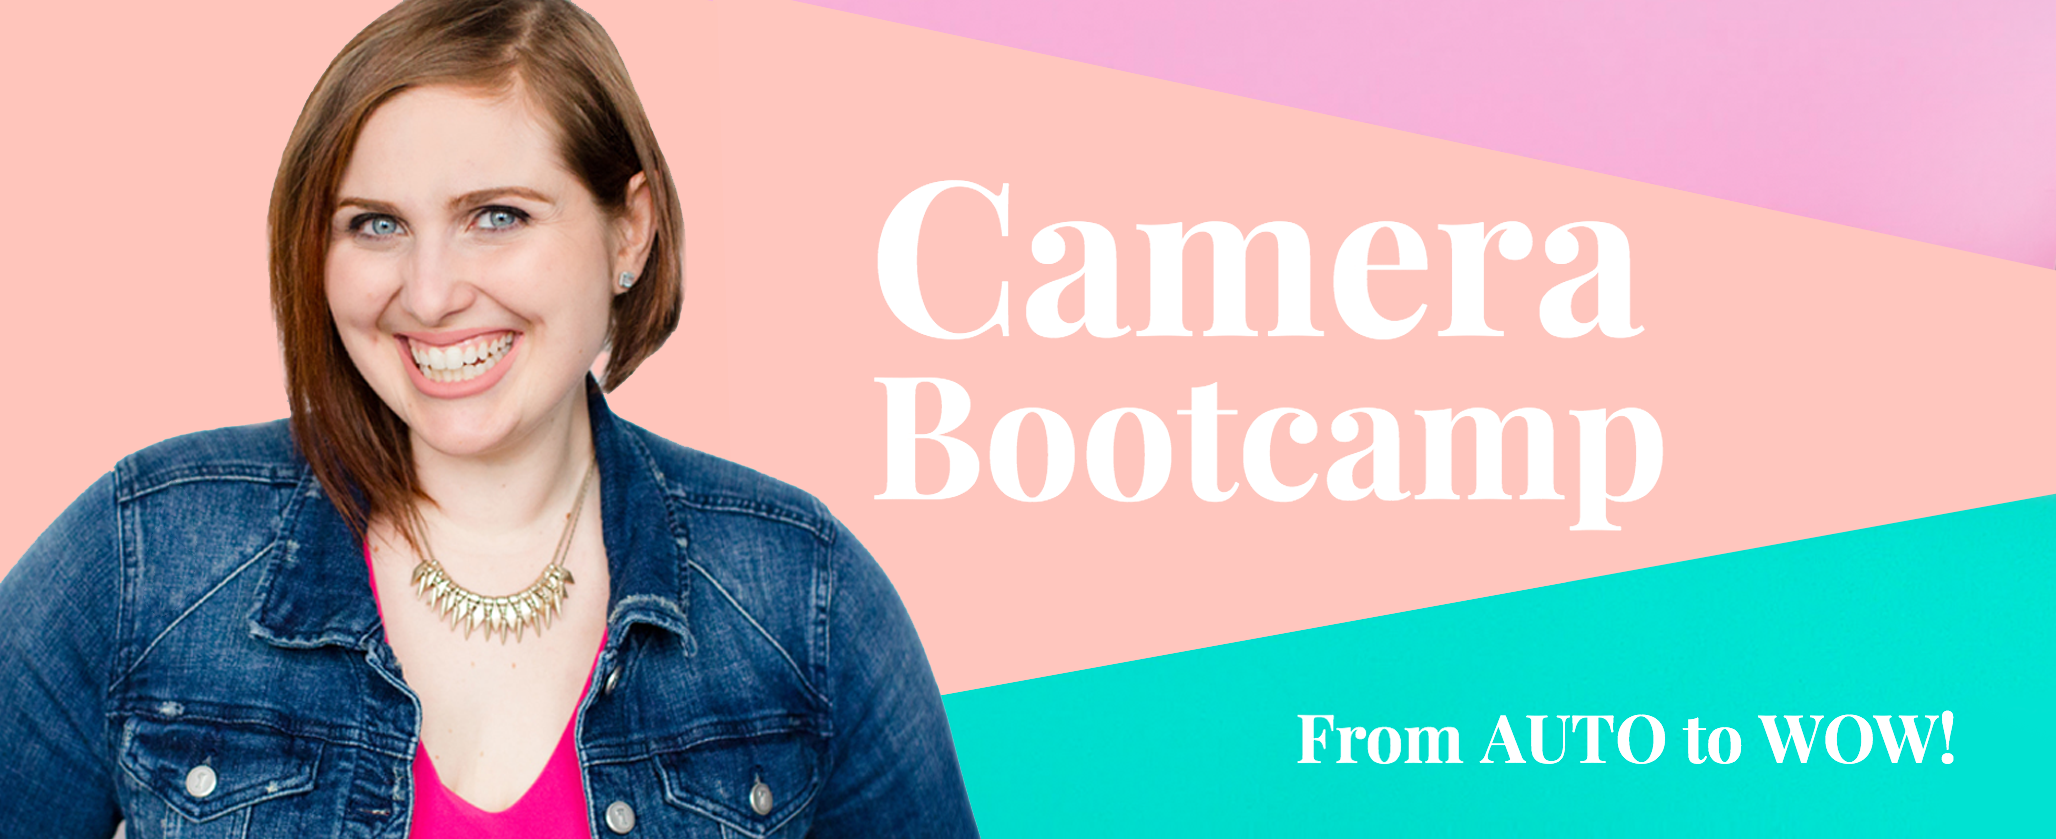 smiling woman "Camera Bootcamp"